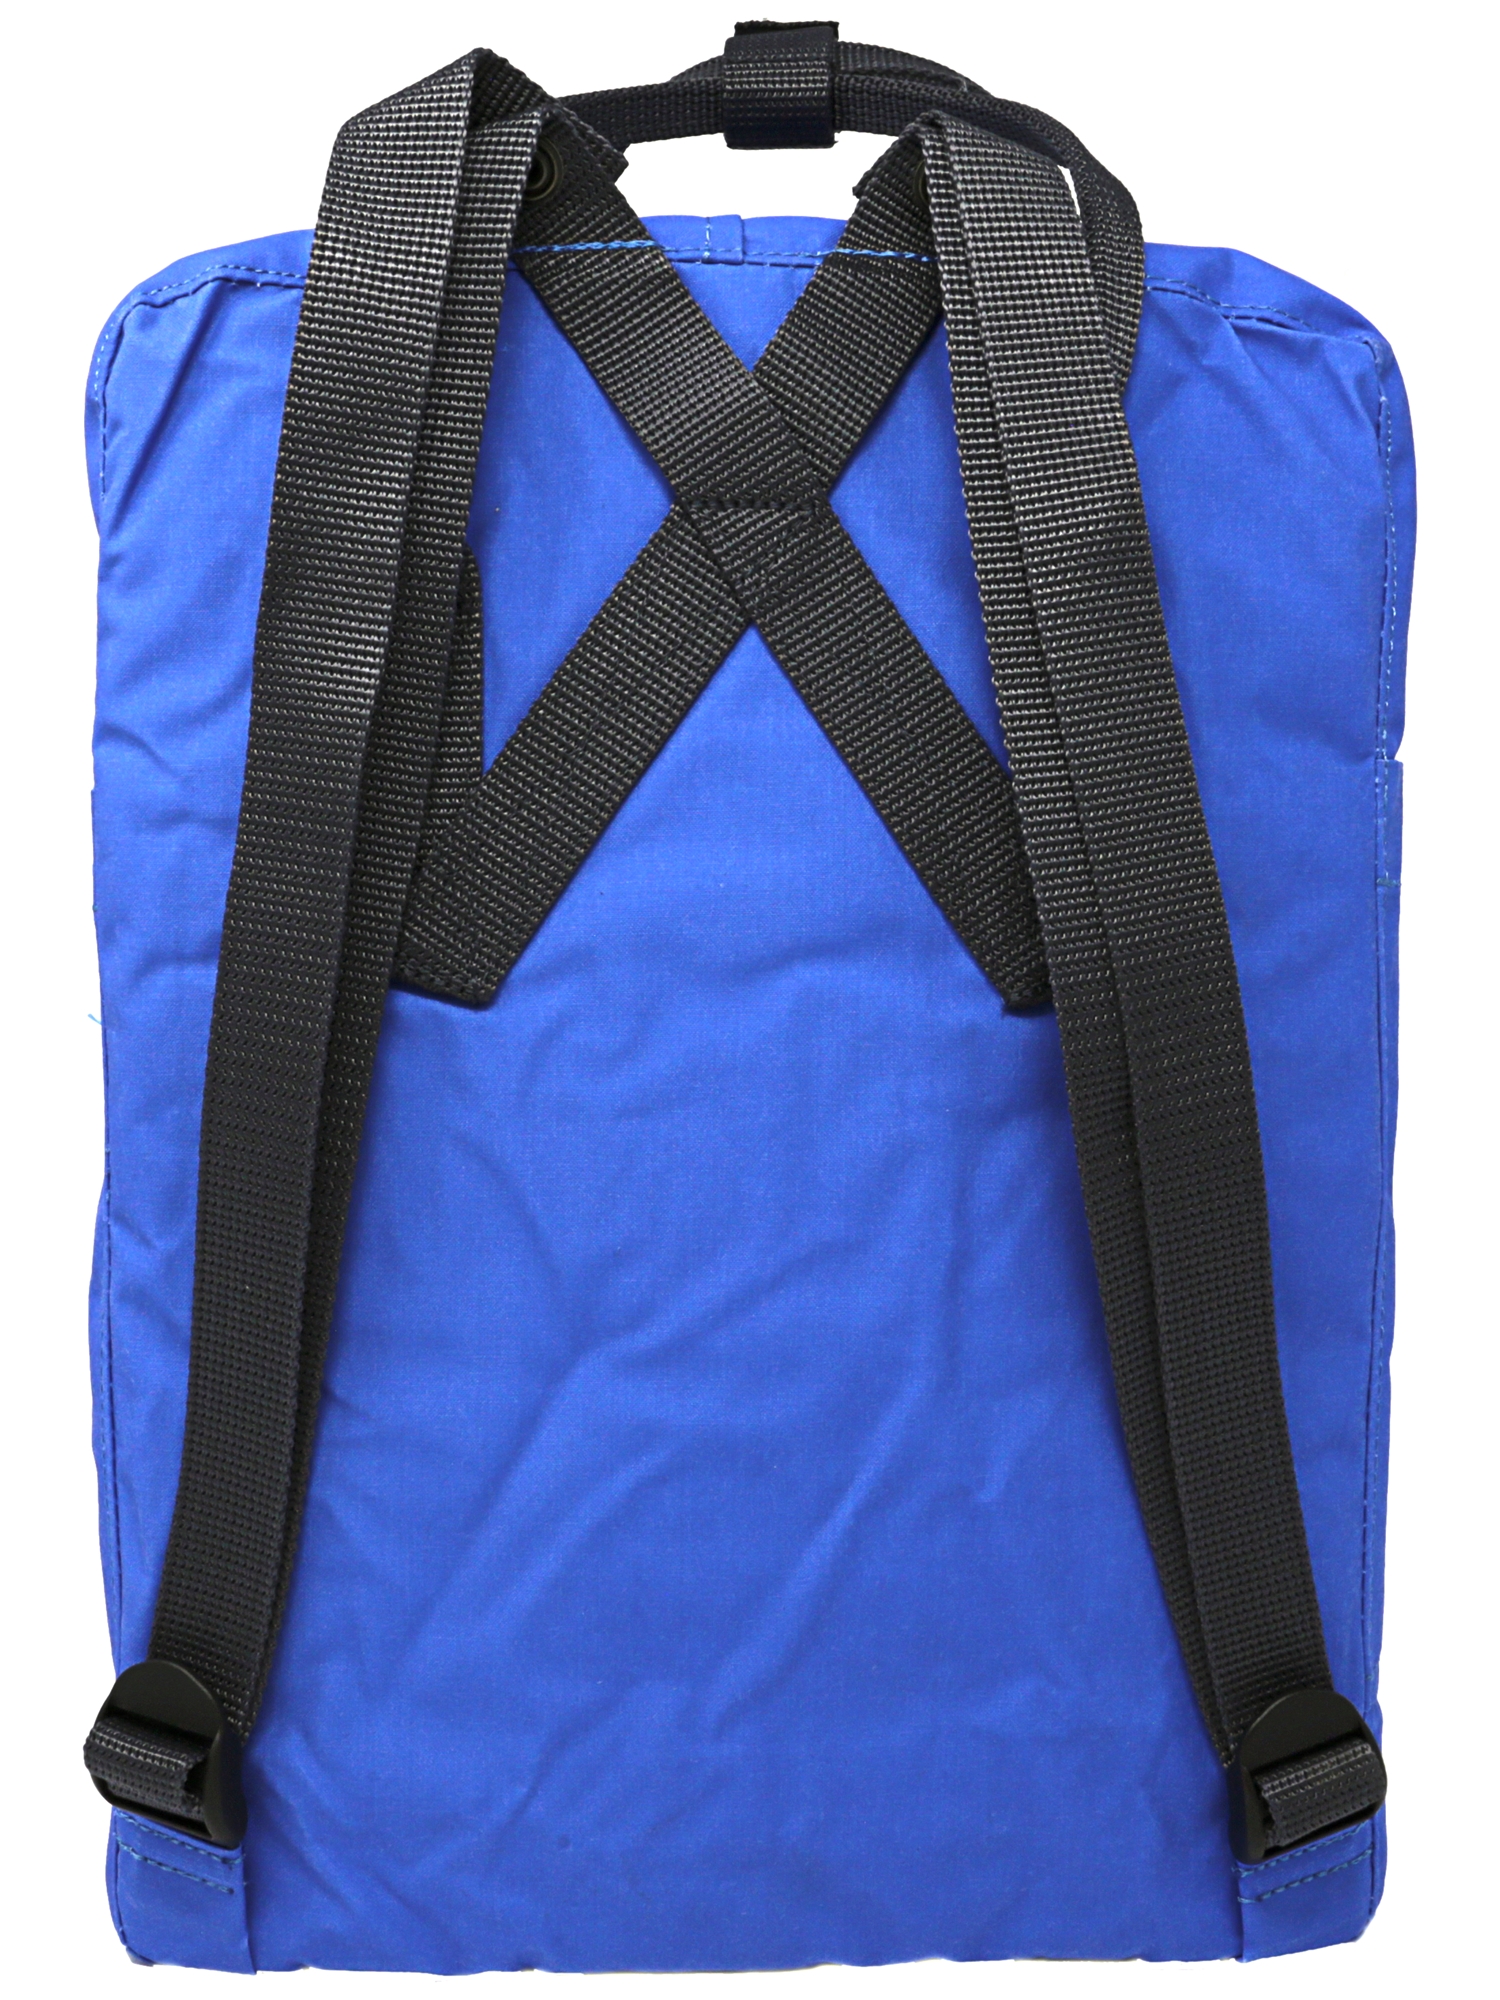 Fjallraven - Kanken Classic Backpack for Everyday - UN Blue/Navy - image 4 of 4